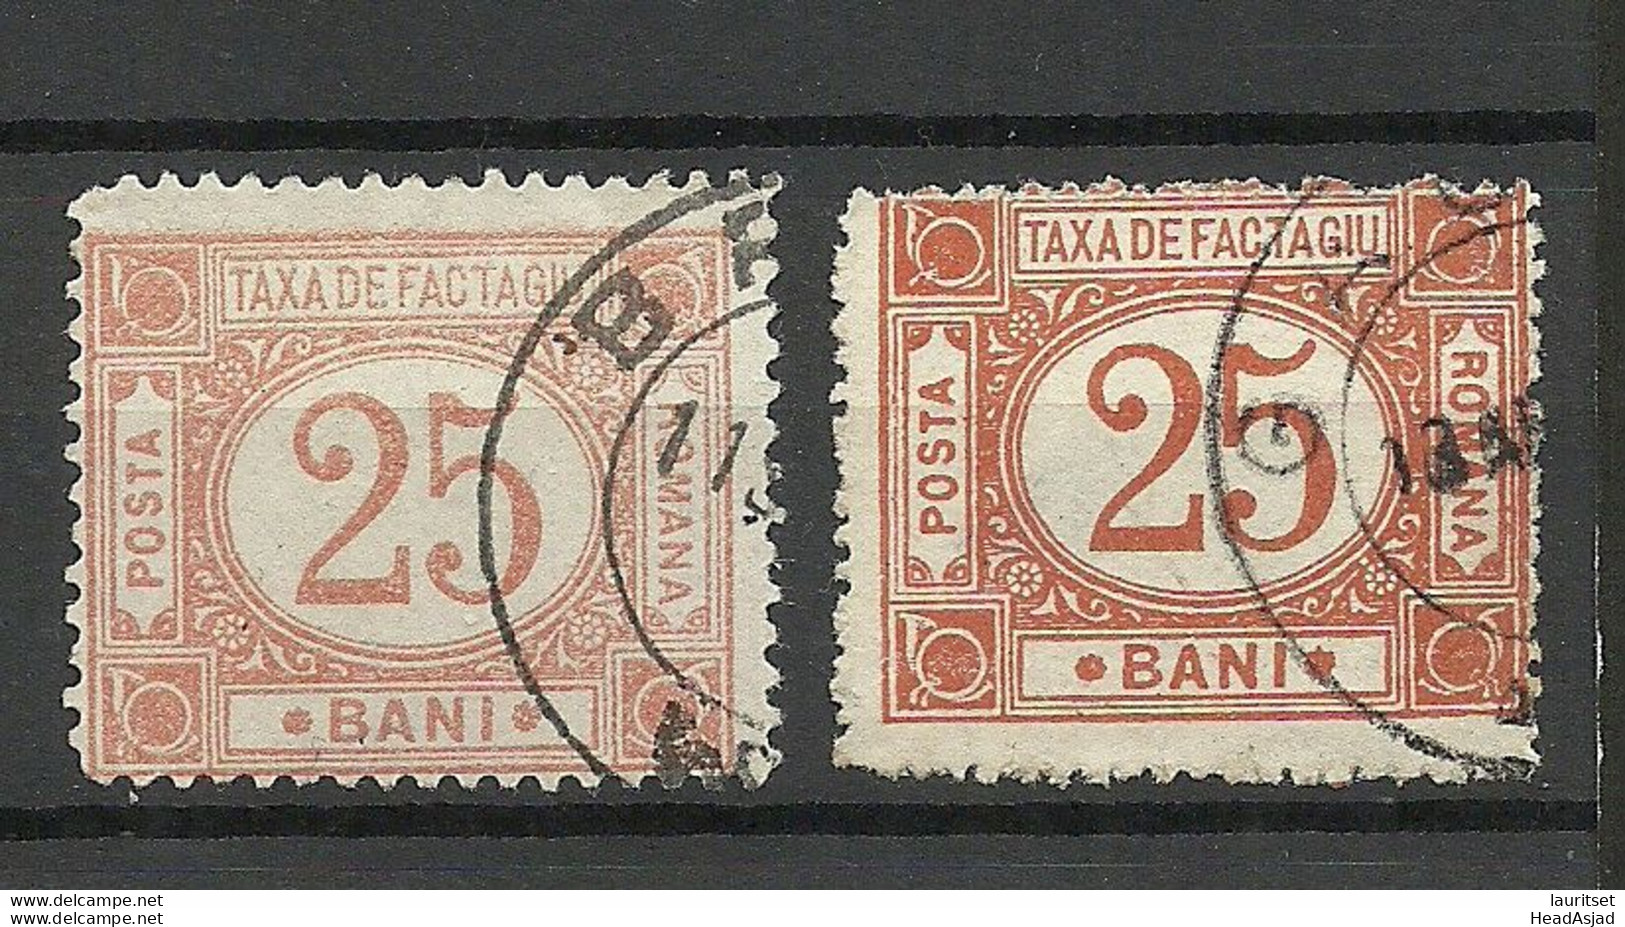 ROMANIA Rumänien 1898-1905 Michel 3 - 4 O Paketmarken - Colis Postaux